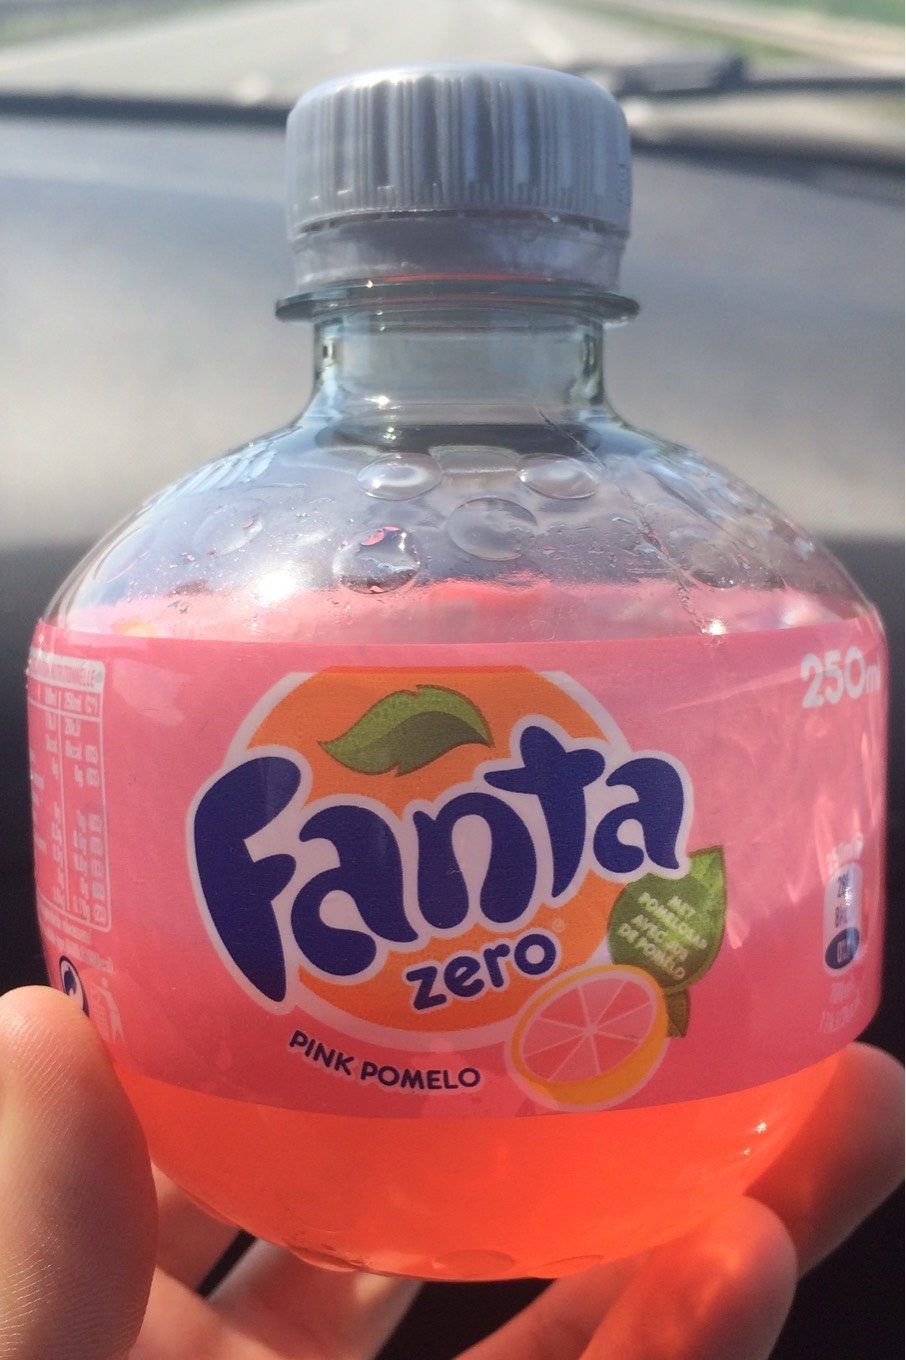 Fanta zero pink pomelo - Product - fr